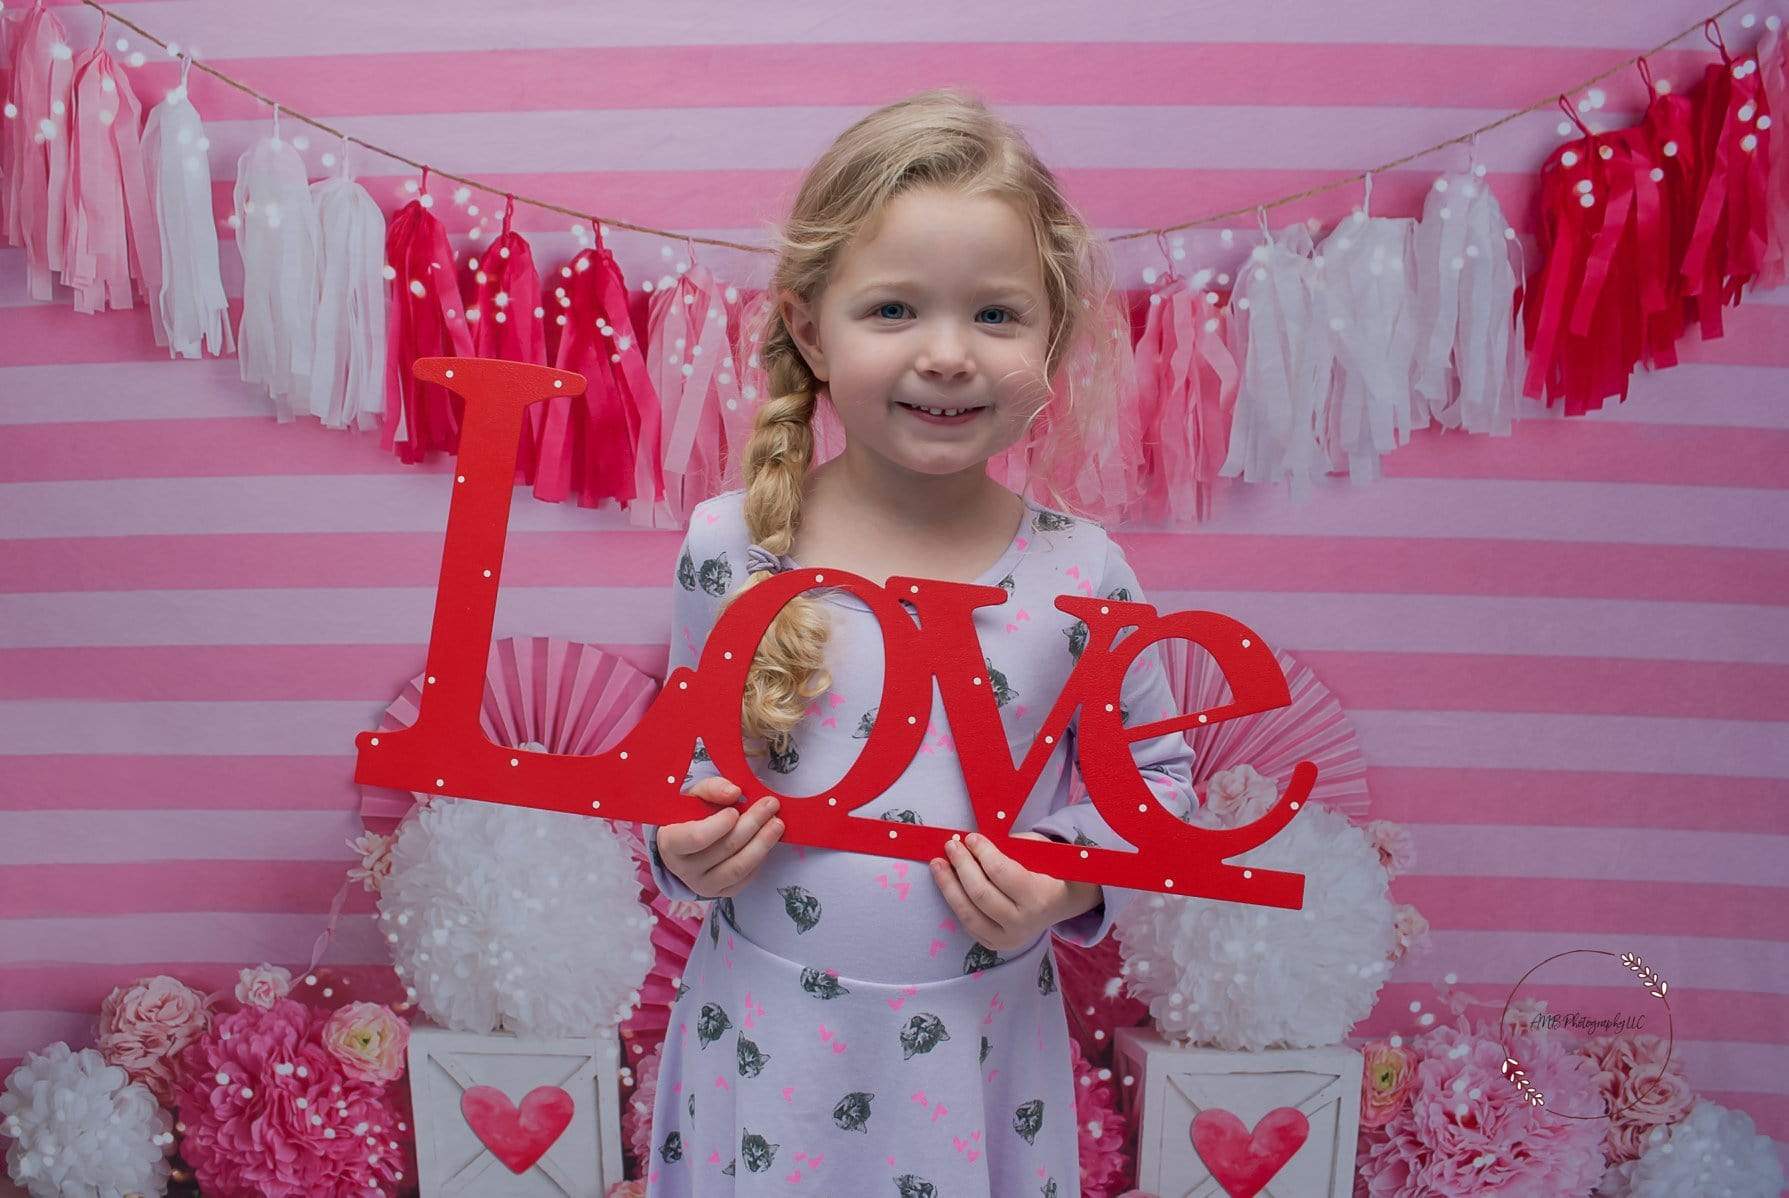 Katebackdrop£ºKate Valentine's Day with Hearts and Stripes Backdrop Designed By Mandy Ringe Photography